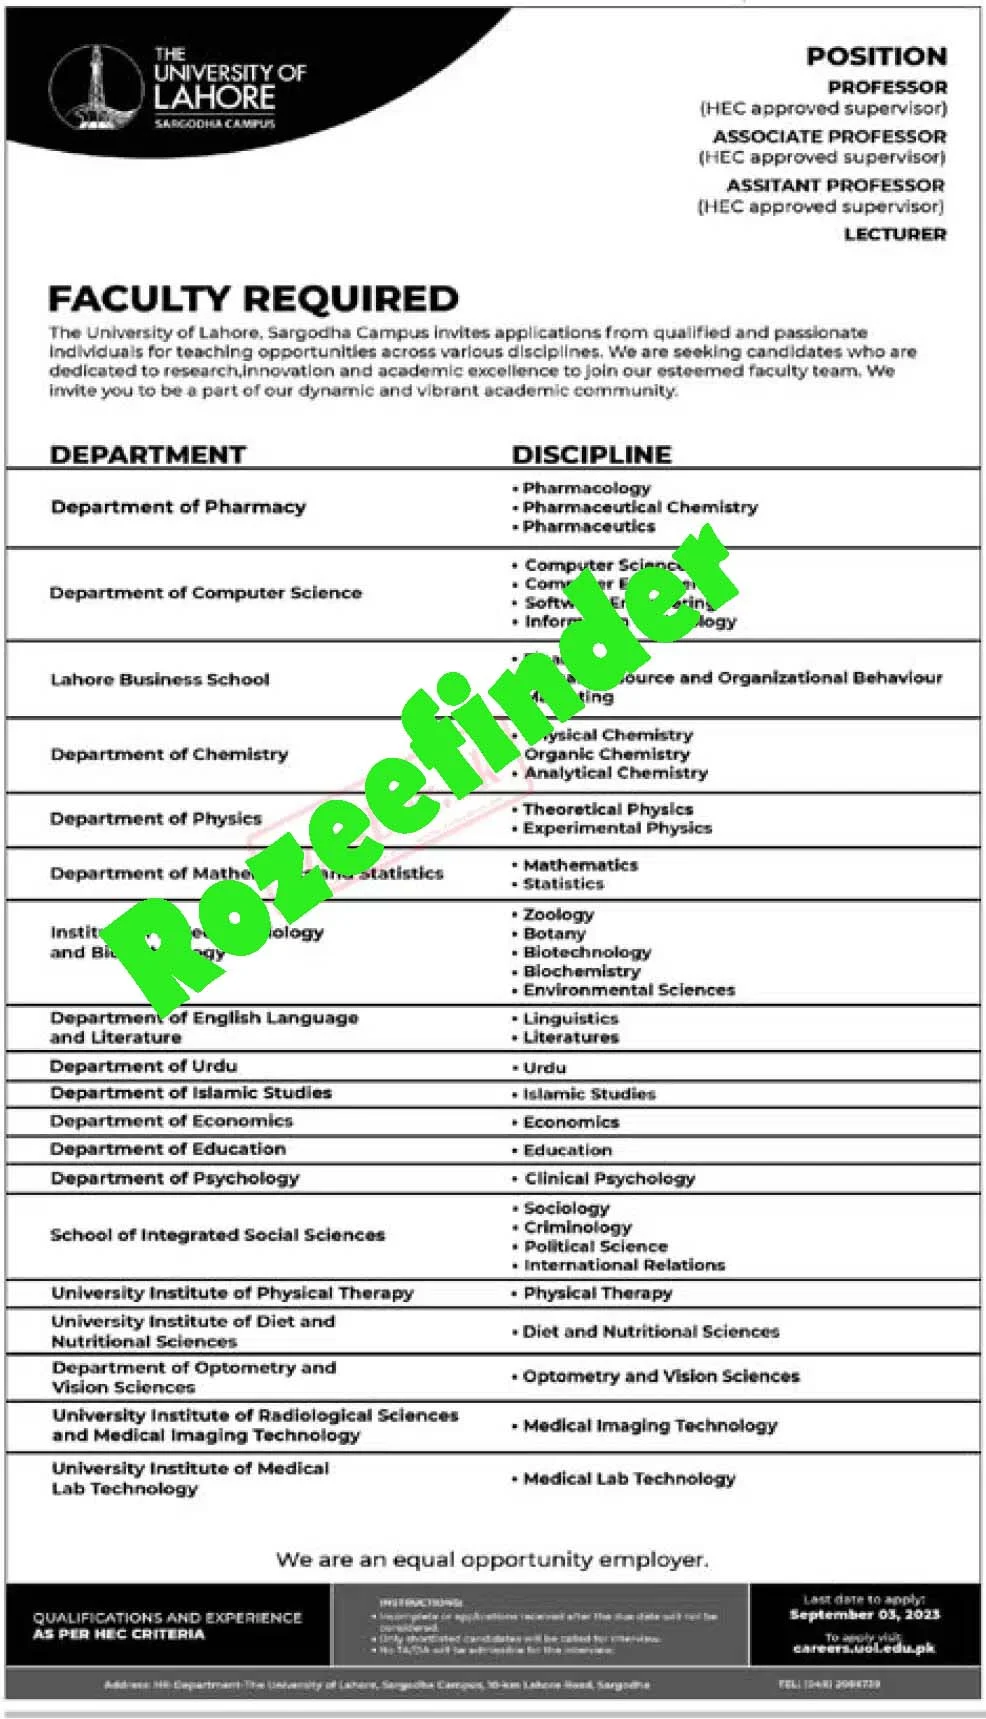 UOL Jobs 2023 – University of Lahore Jobs 2023 - Tiktokio